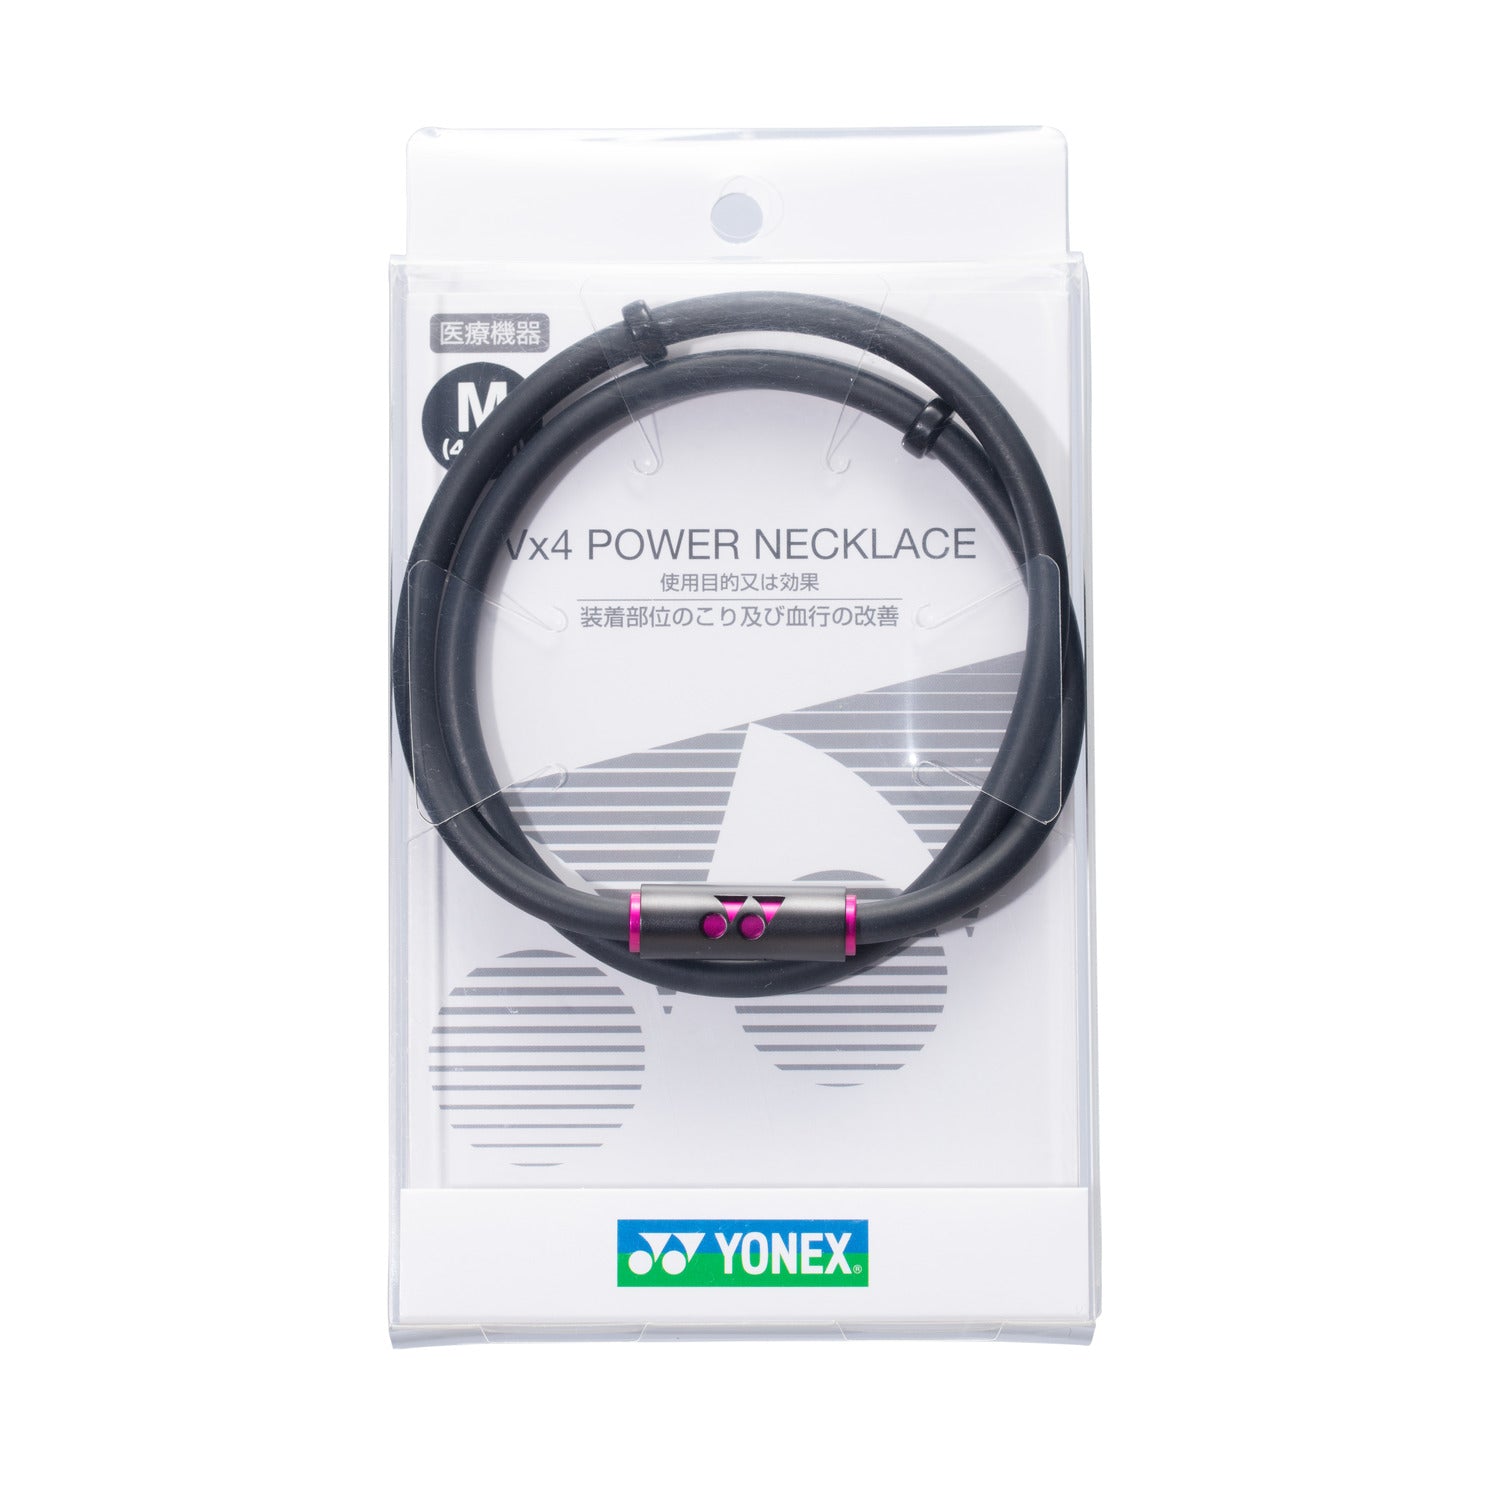 Yonex V4 power necklace. YOX00020 - Black / Magenta / S